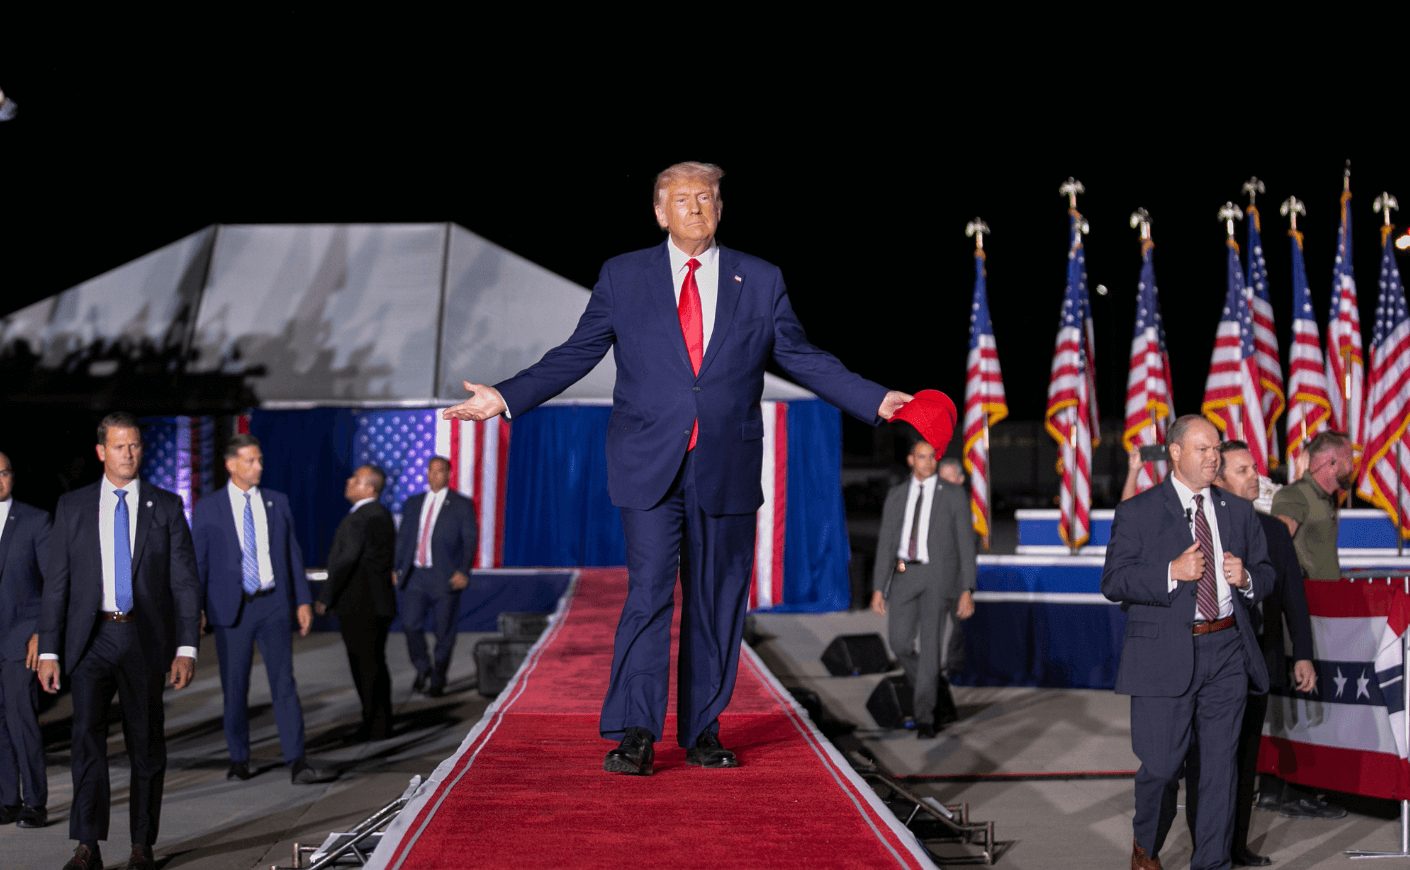 Trump walking down a red carpet